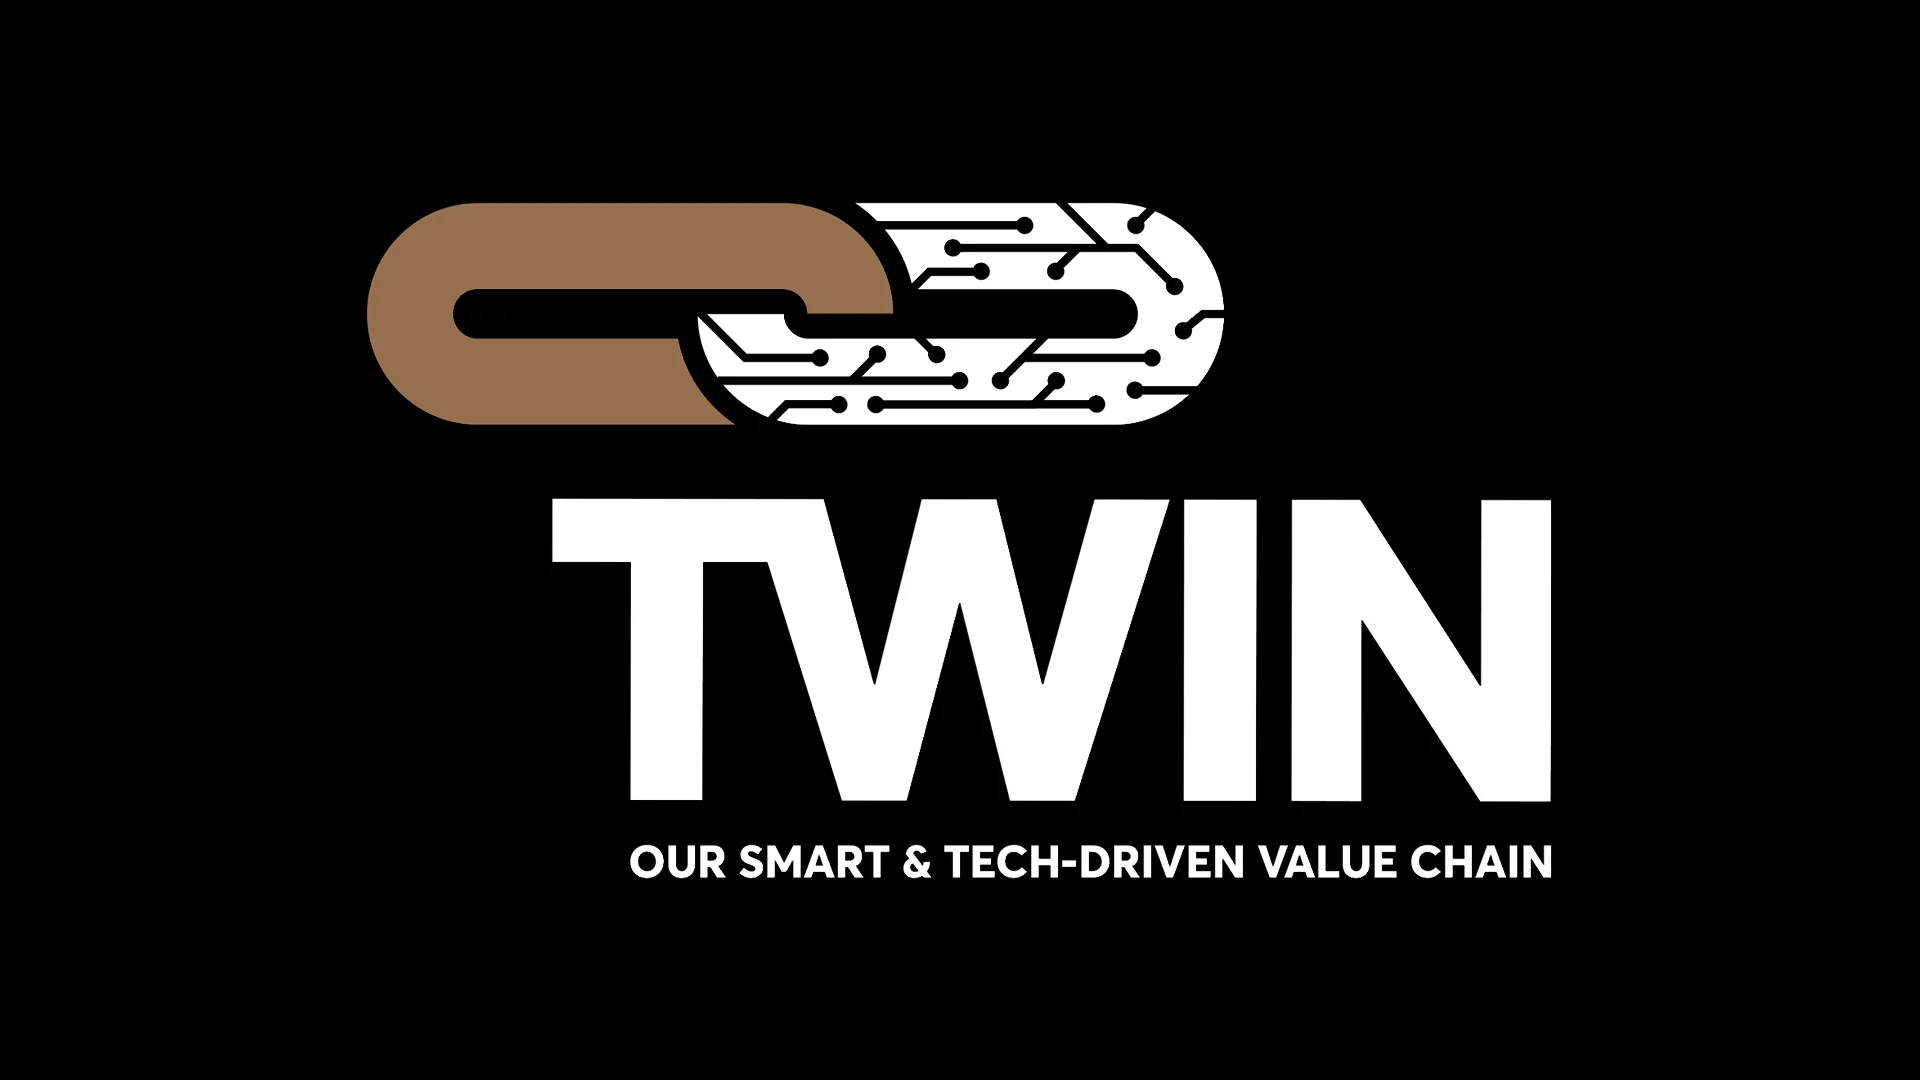 Digital TWIN – Our smart & tech-driven value chain